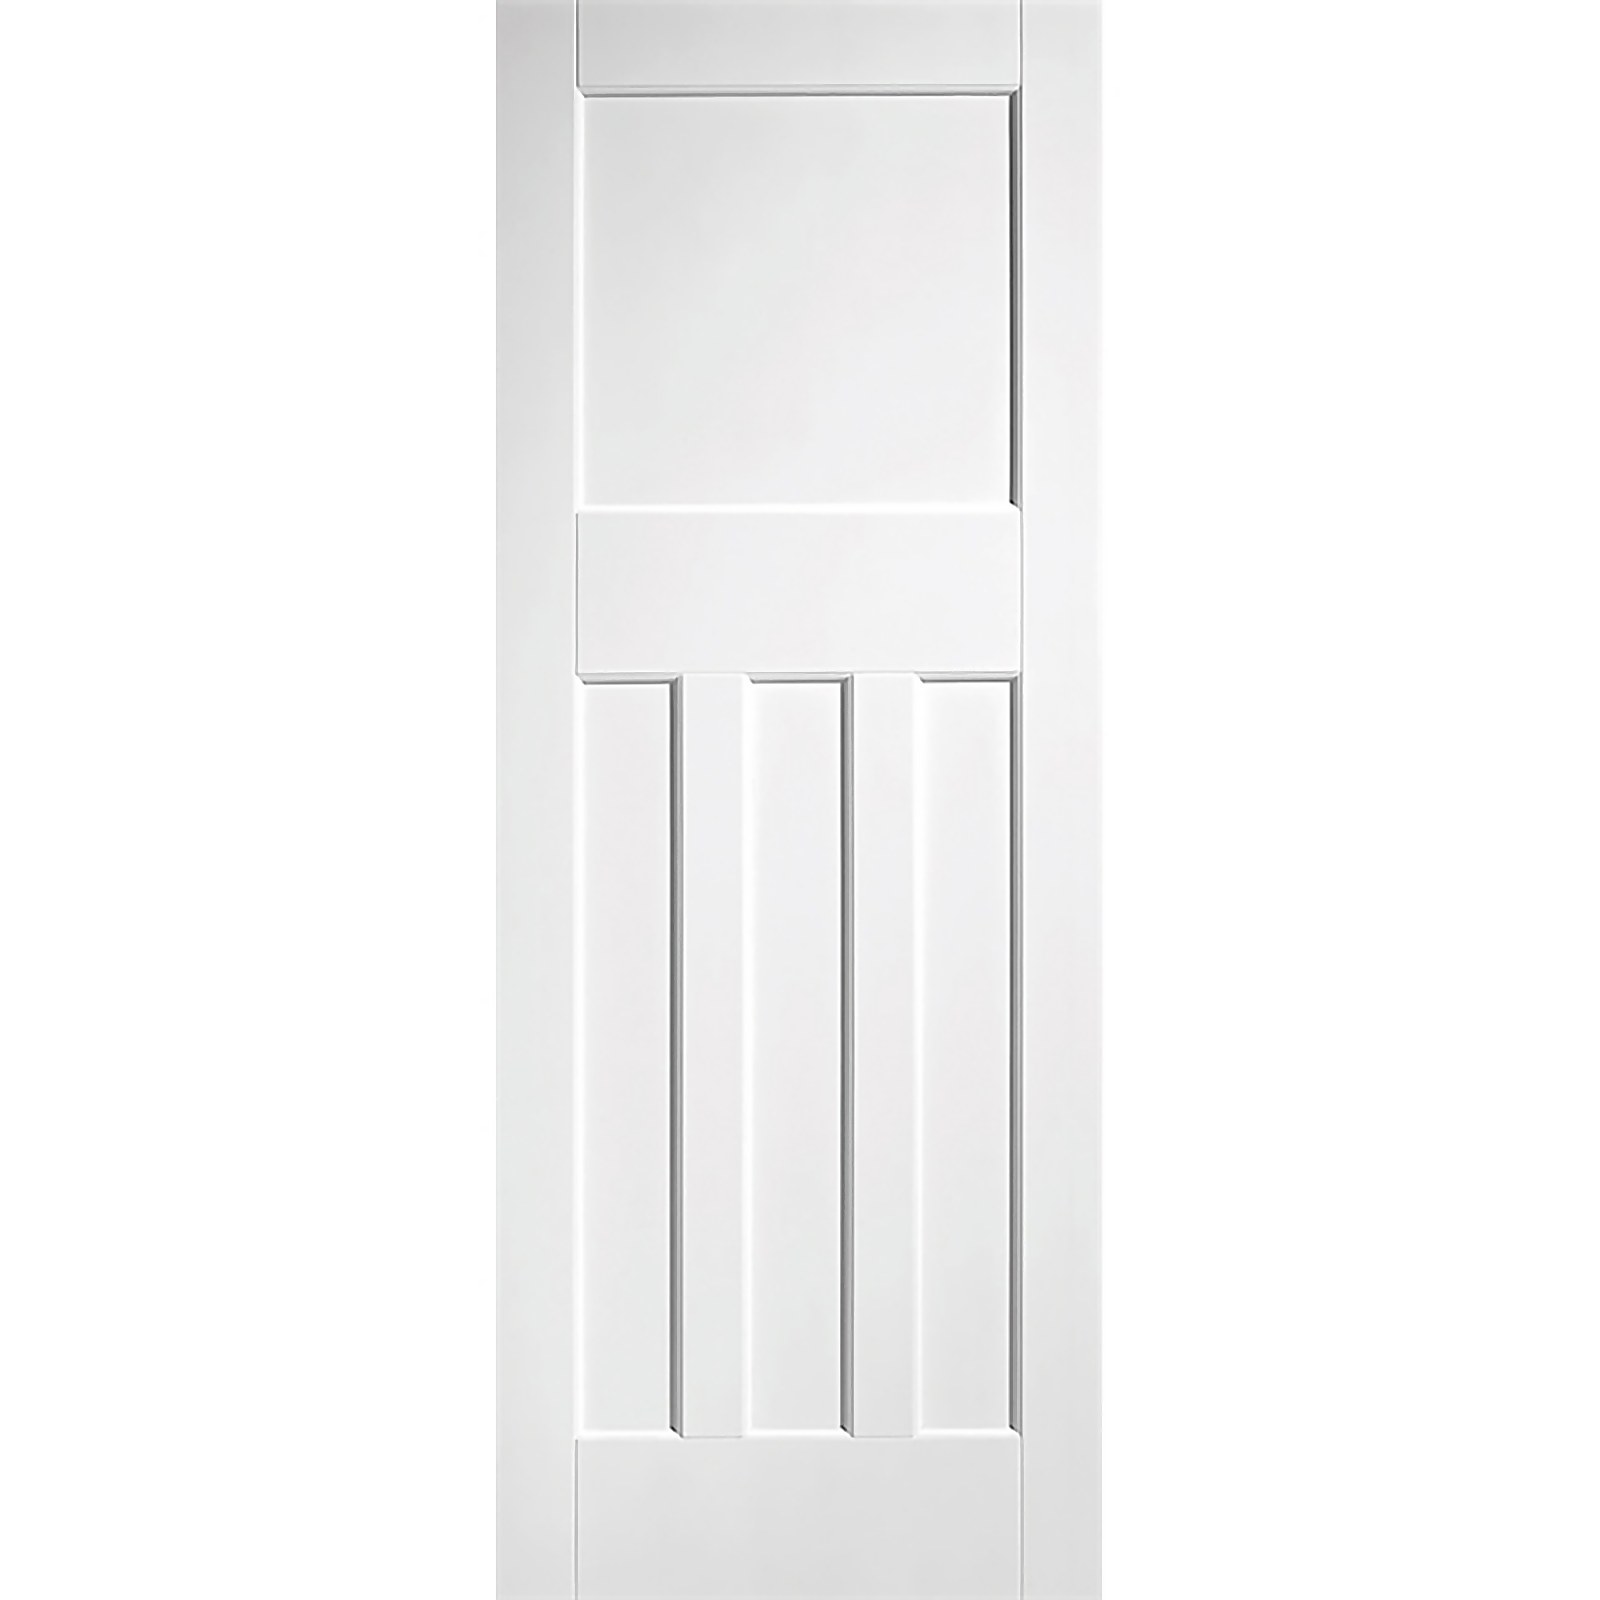 30's Style - White Primed Internal Fire Door - 1981 x 762 x 44mm